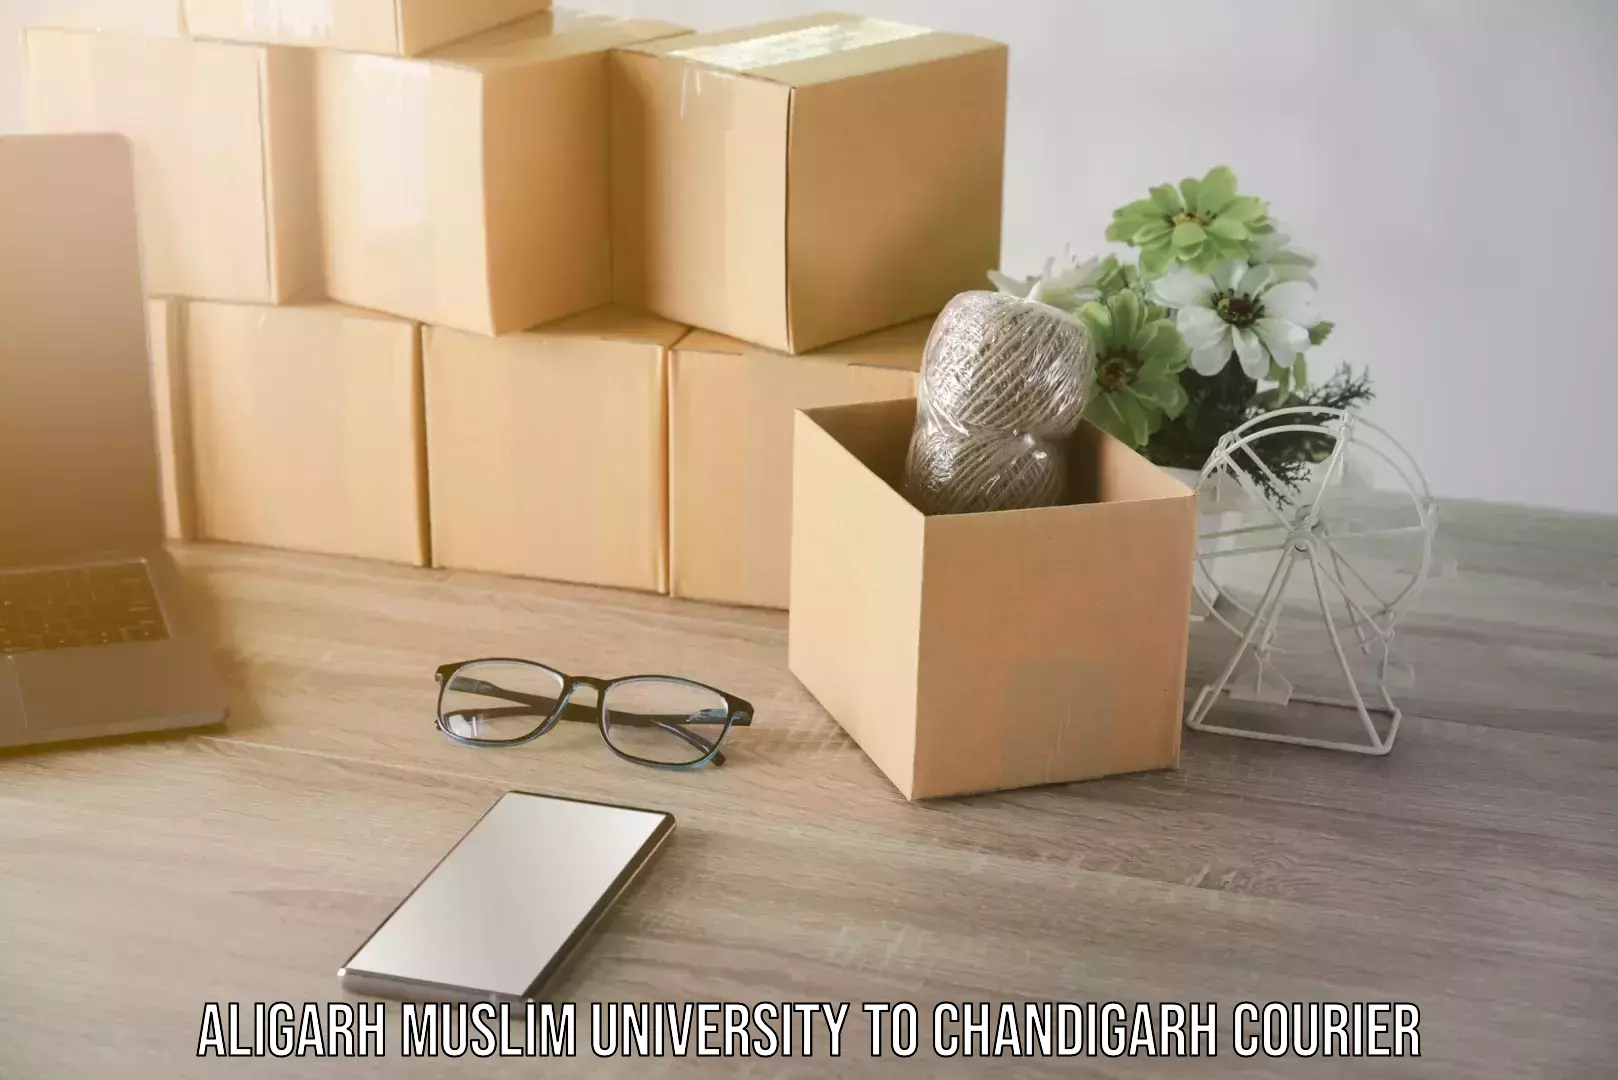 Express delivery network Aligarh Muslim University to Chandigarh